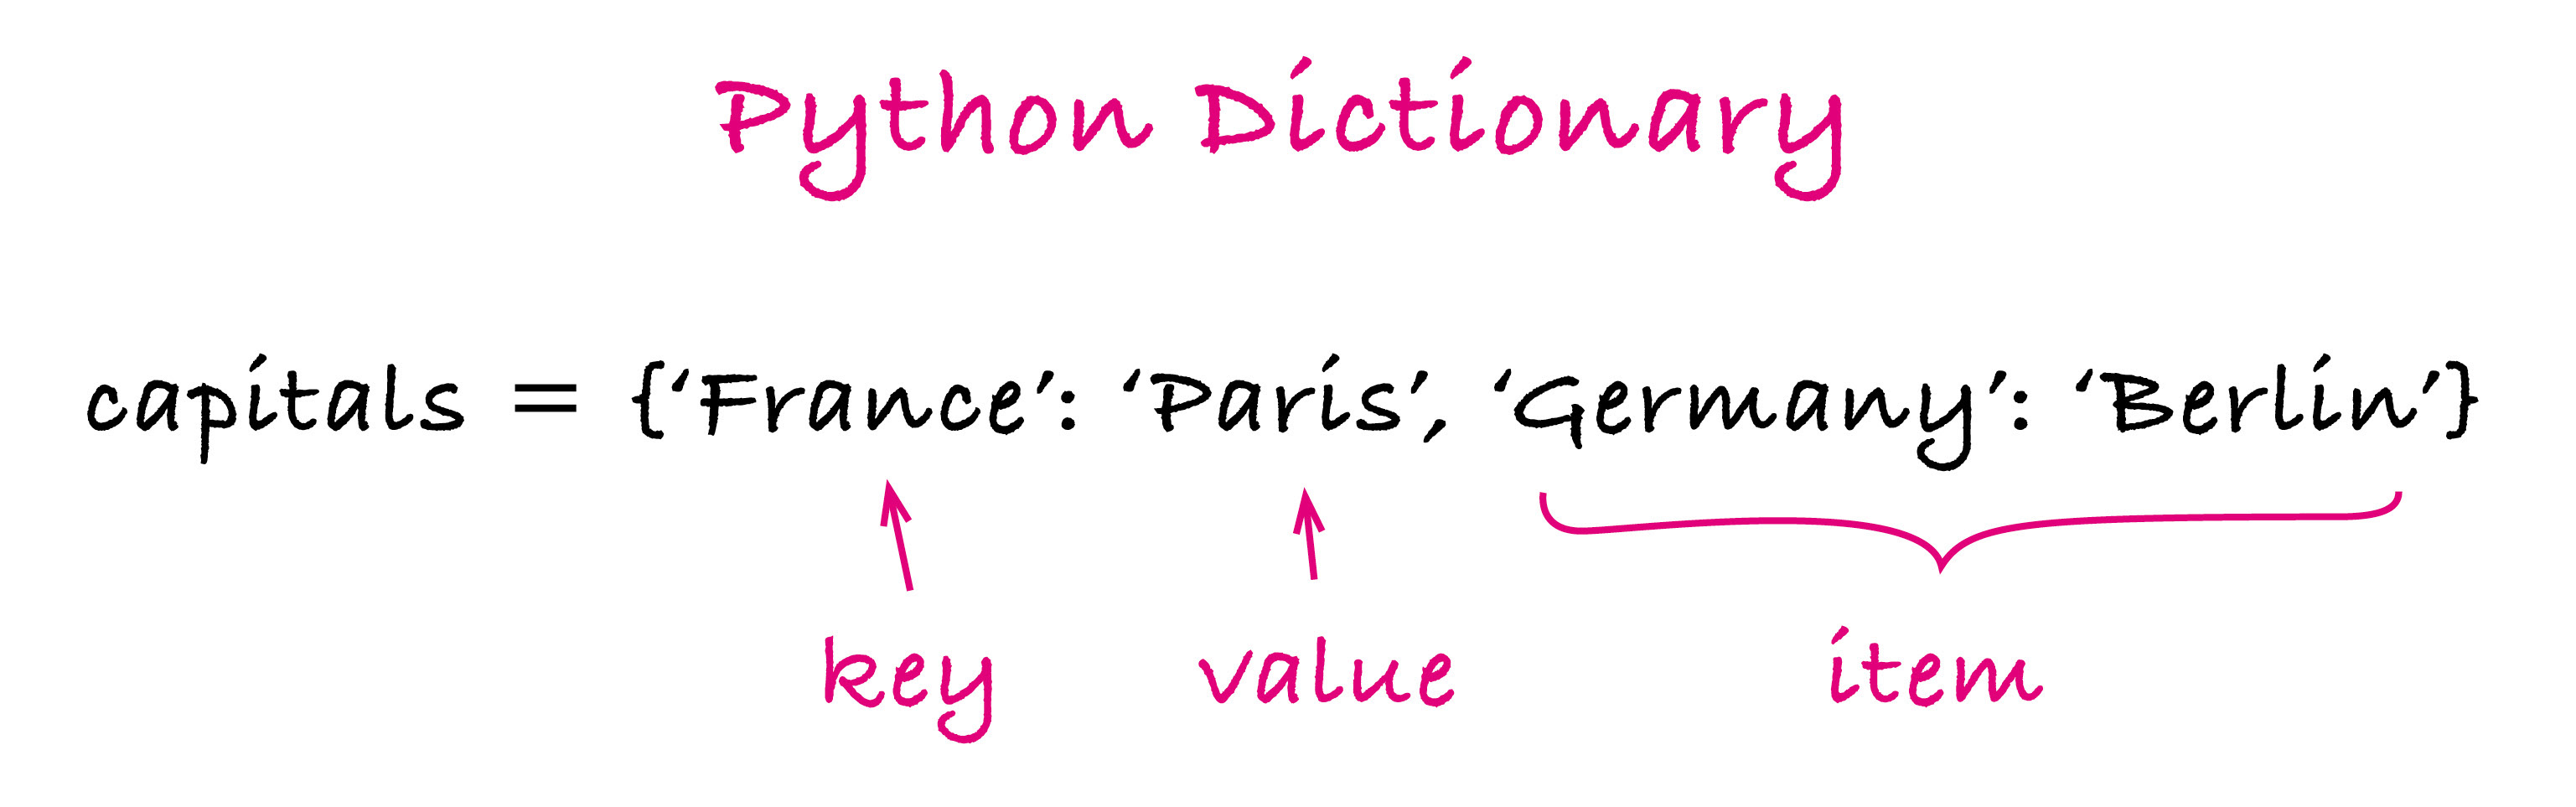 python dictionary.jpg